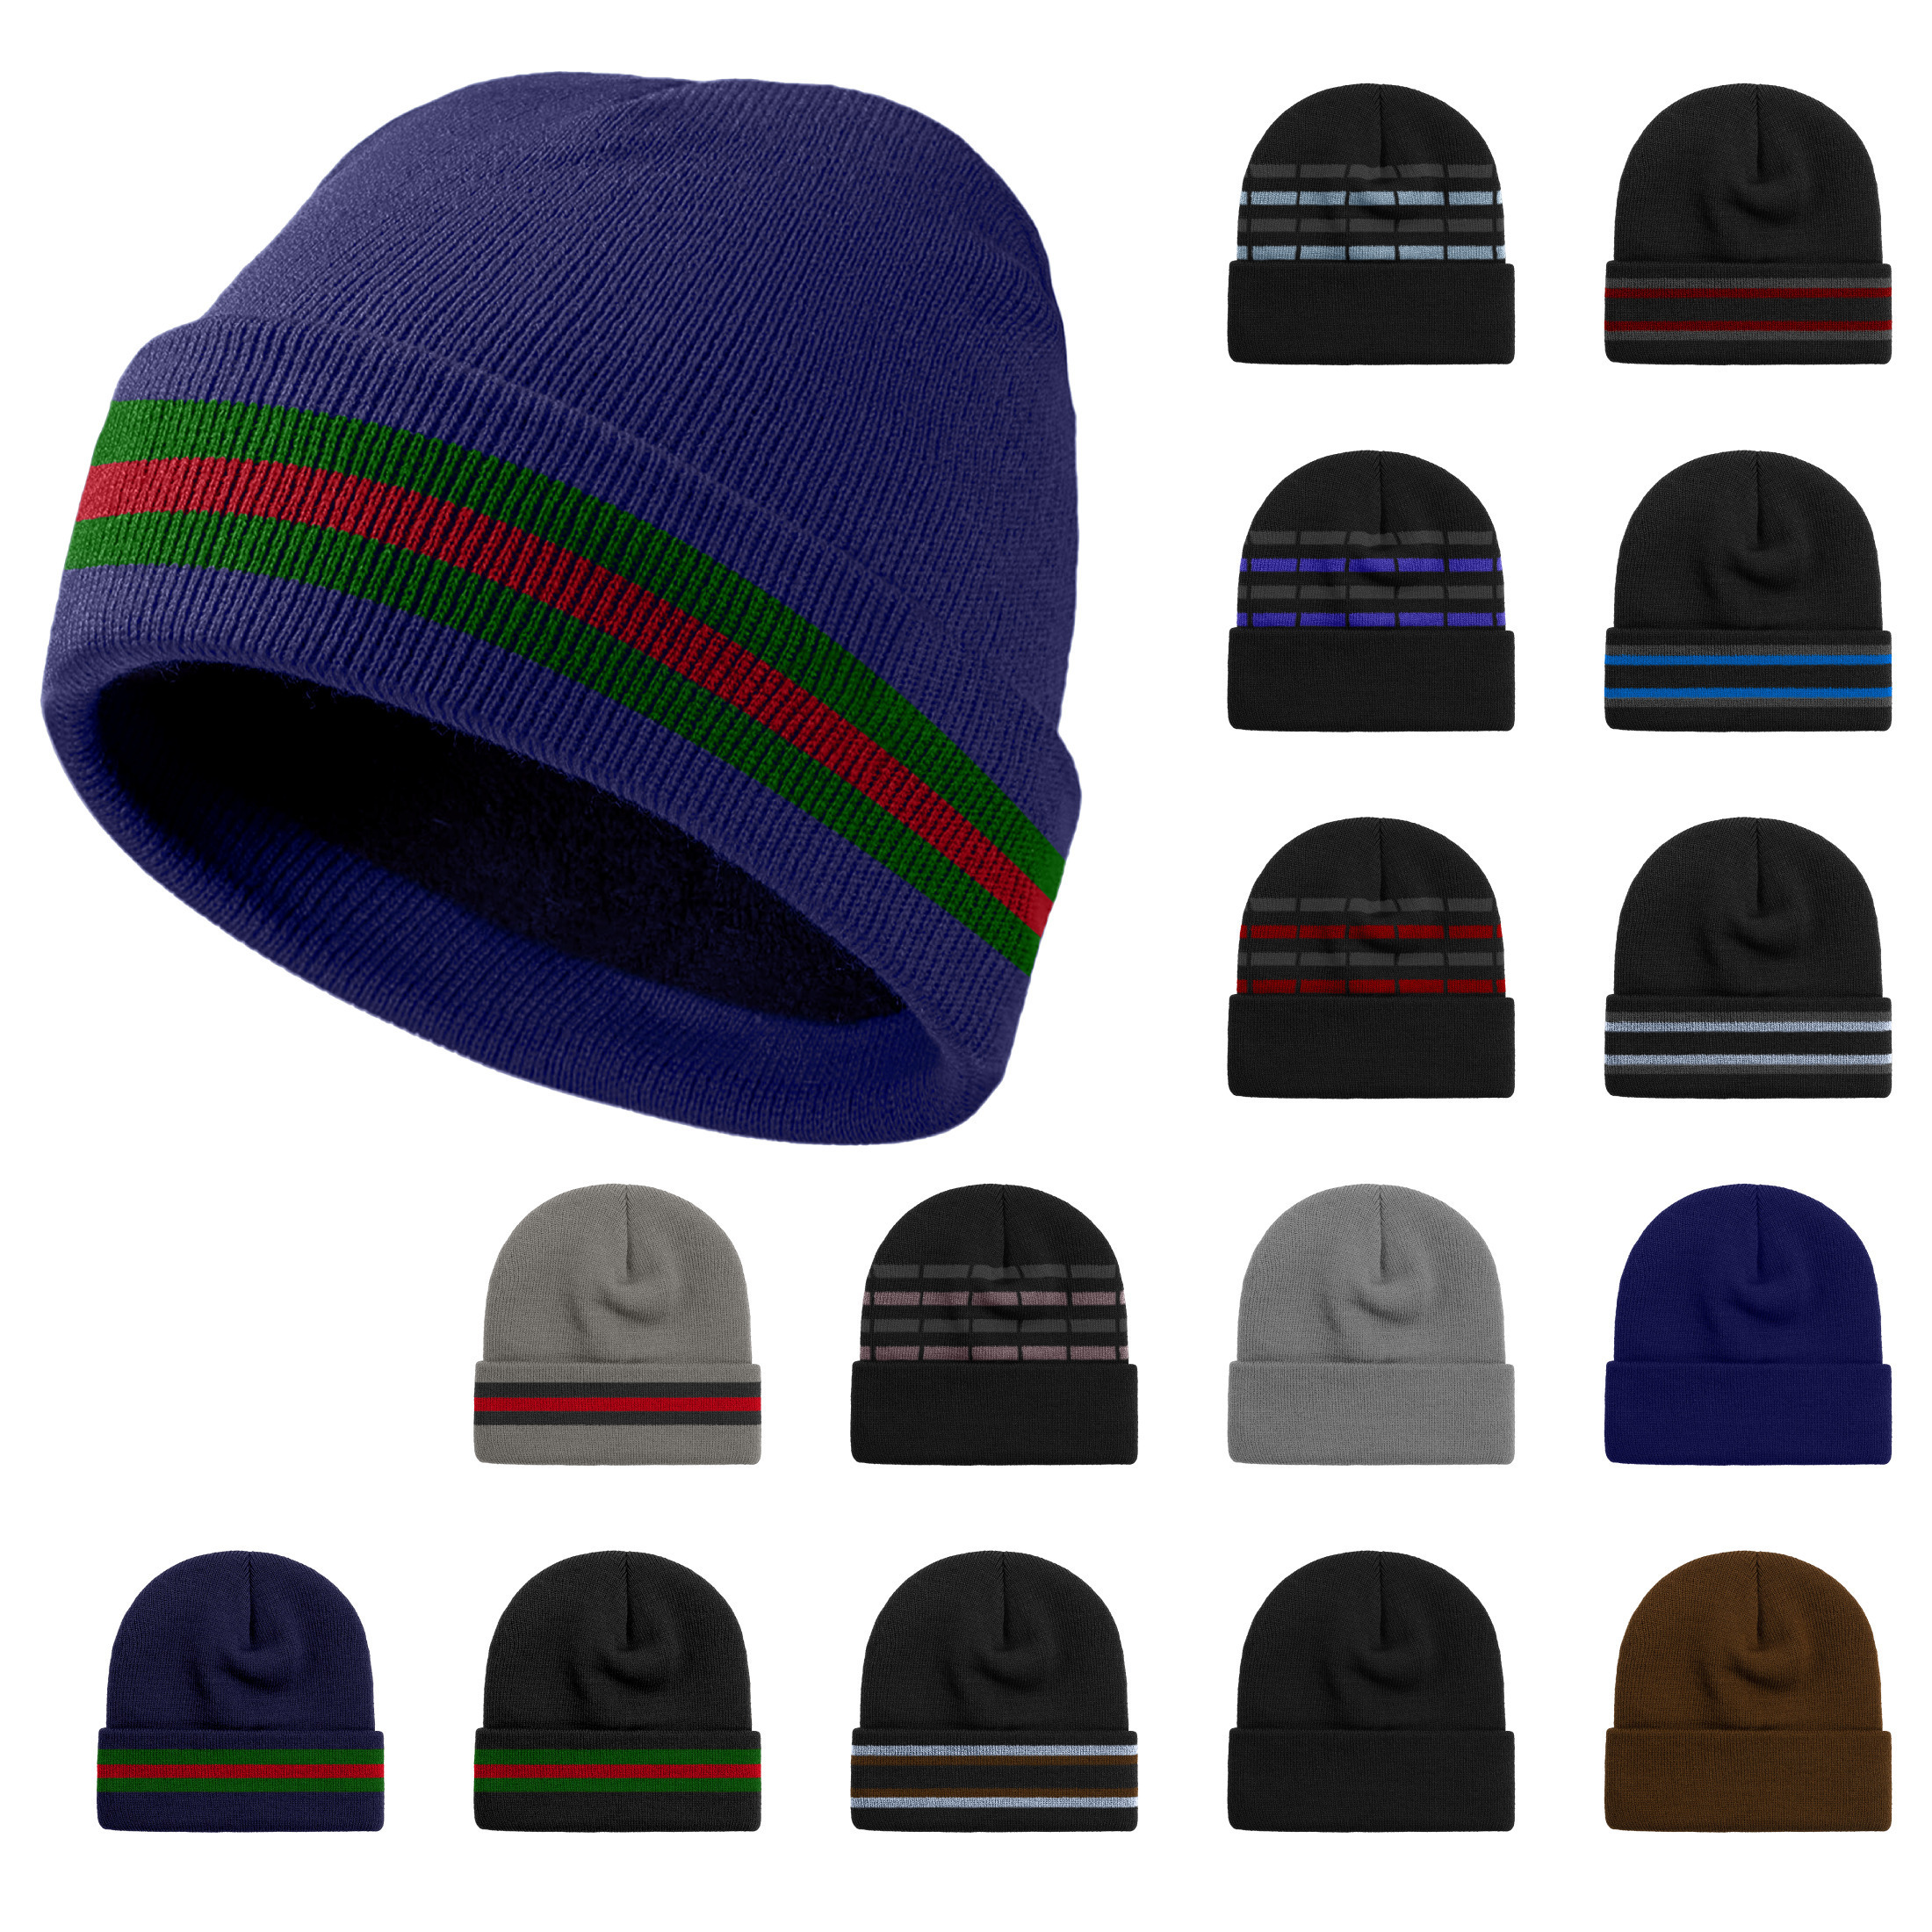 2-Pack: Men's Warm Knit Cuffed Cap Beanie Hat W/ Faux Fur Lining - Solid